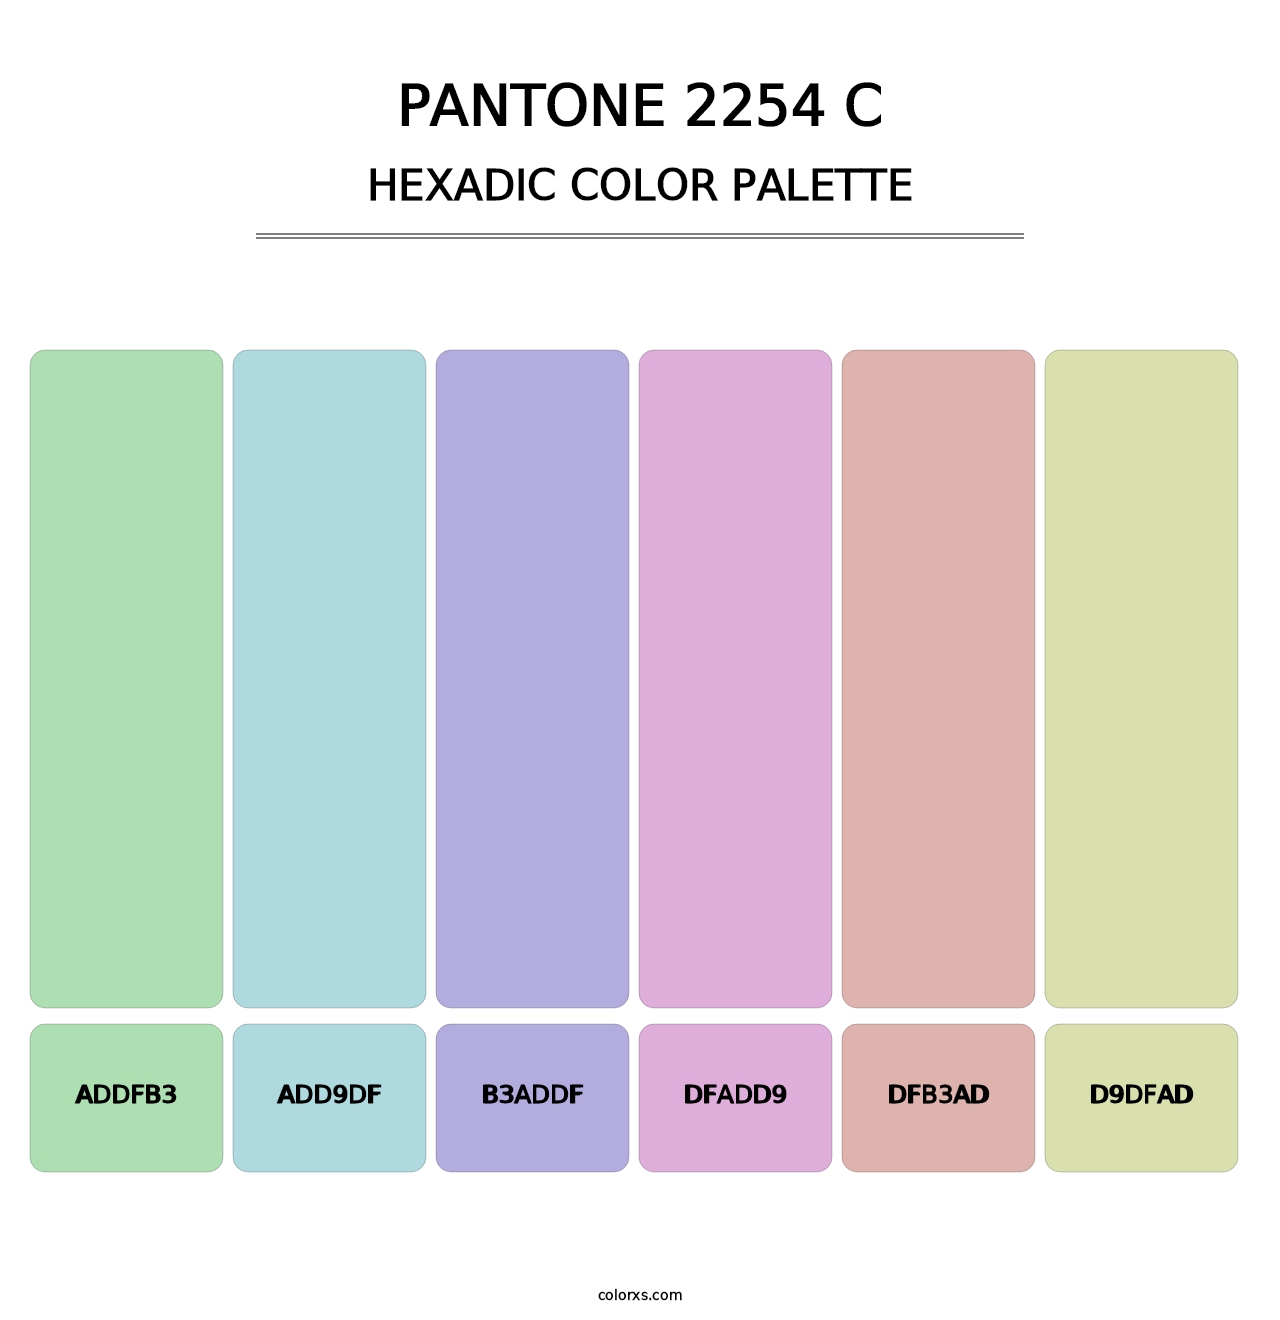 PANTONE 2254 C - Hexadic Color Palette